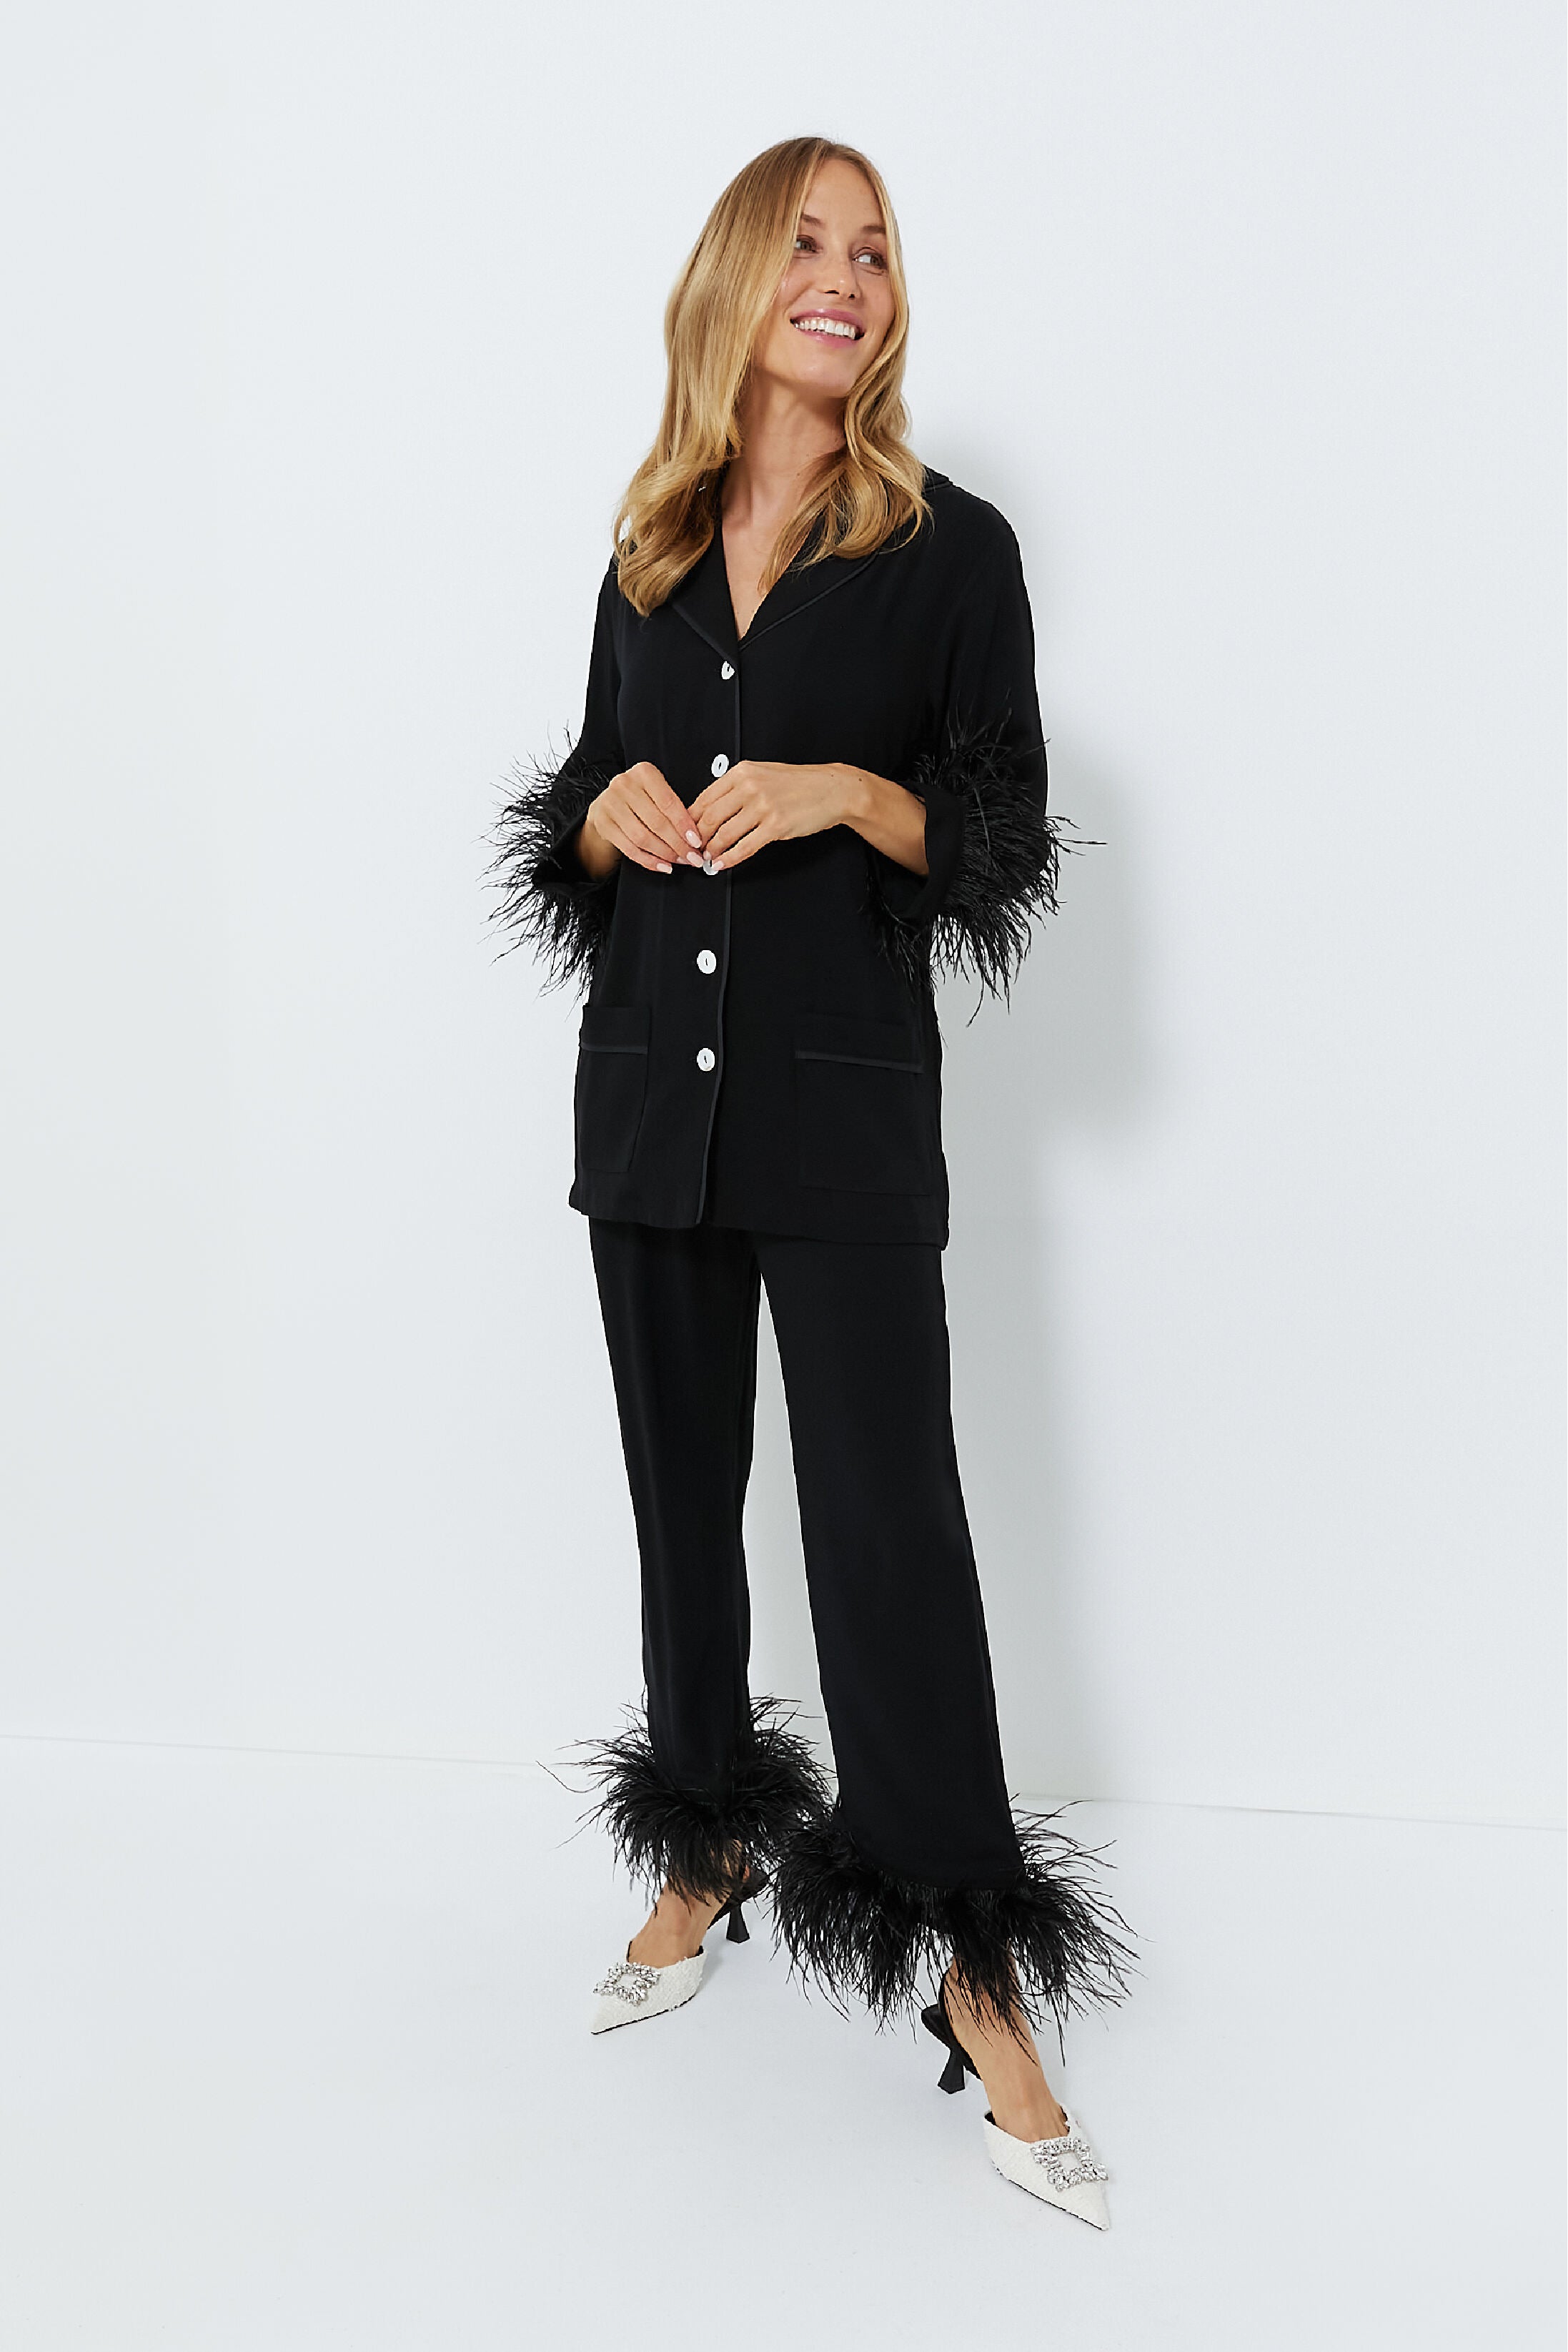 ELISS Women's Plus Size Ultra Soft Modal Full Length Leggings X-Large Black  at Amazon Women's Clothing store